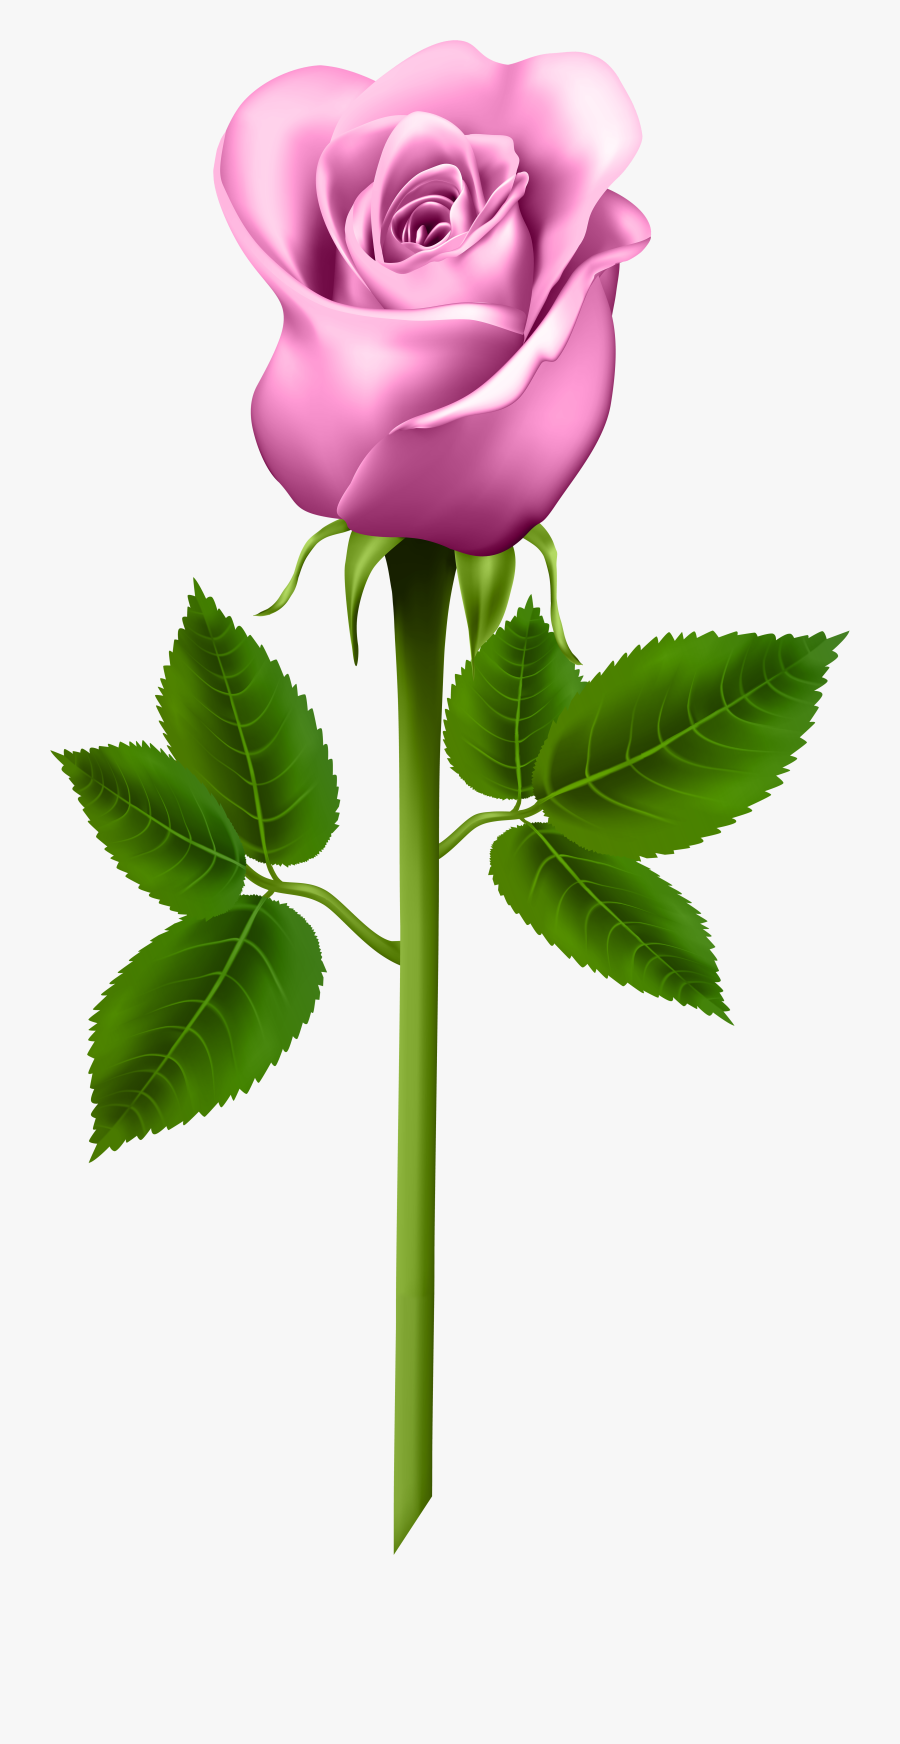 Rose Clipart, Blue Roses, Orange Roses, Flower Pictures, - Good Morning Flowers Rose Hd, Transparent Clipart